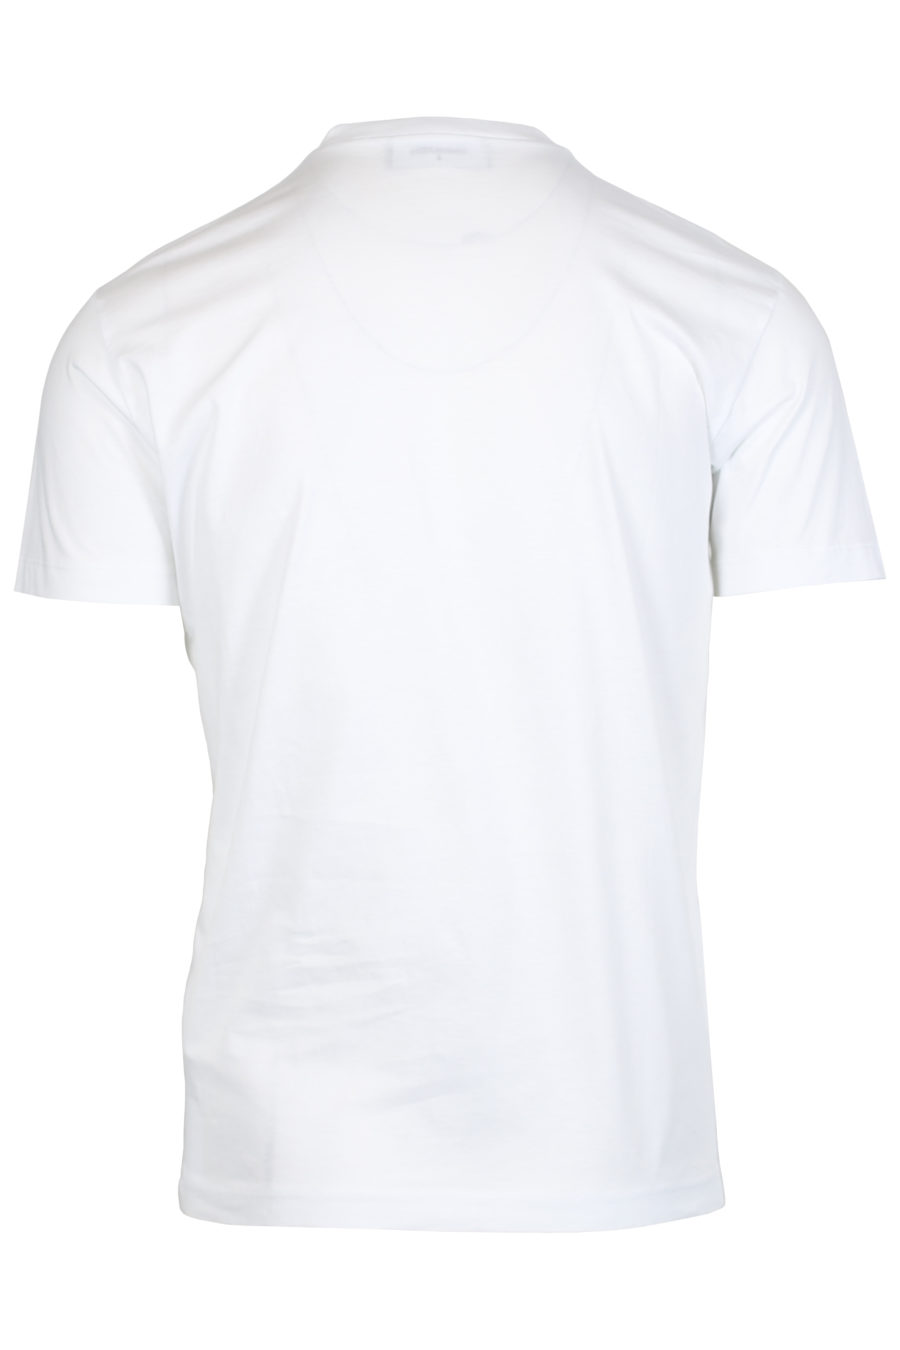 Camiseta blanca con logo "Icon Spray" - IMG 2432